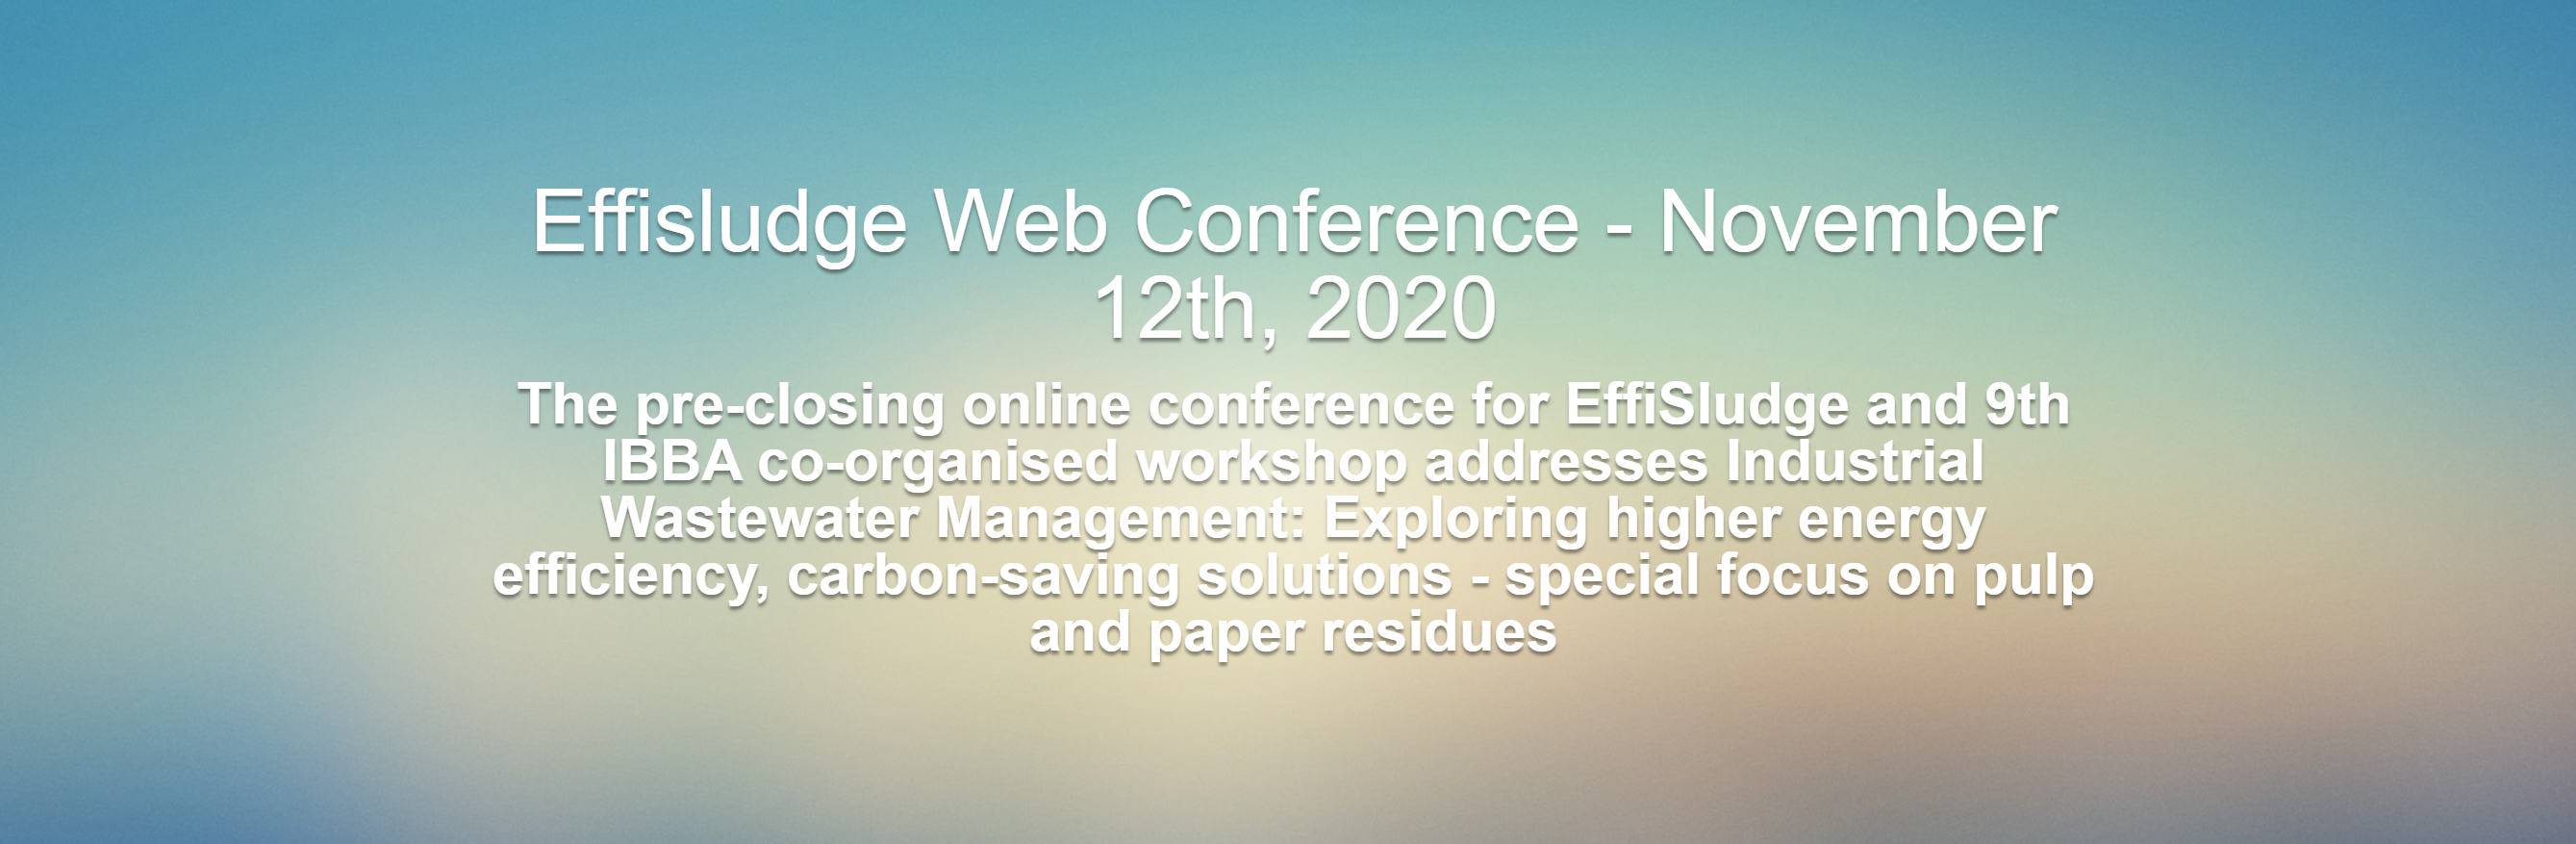 Effisludge Web Conference November 12th, 2020 - Program